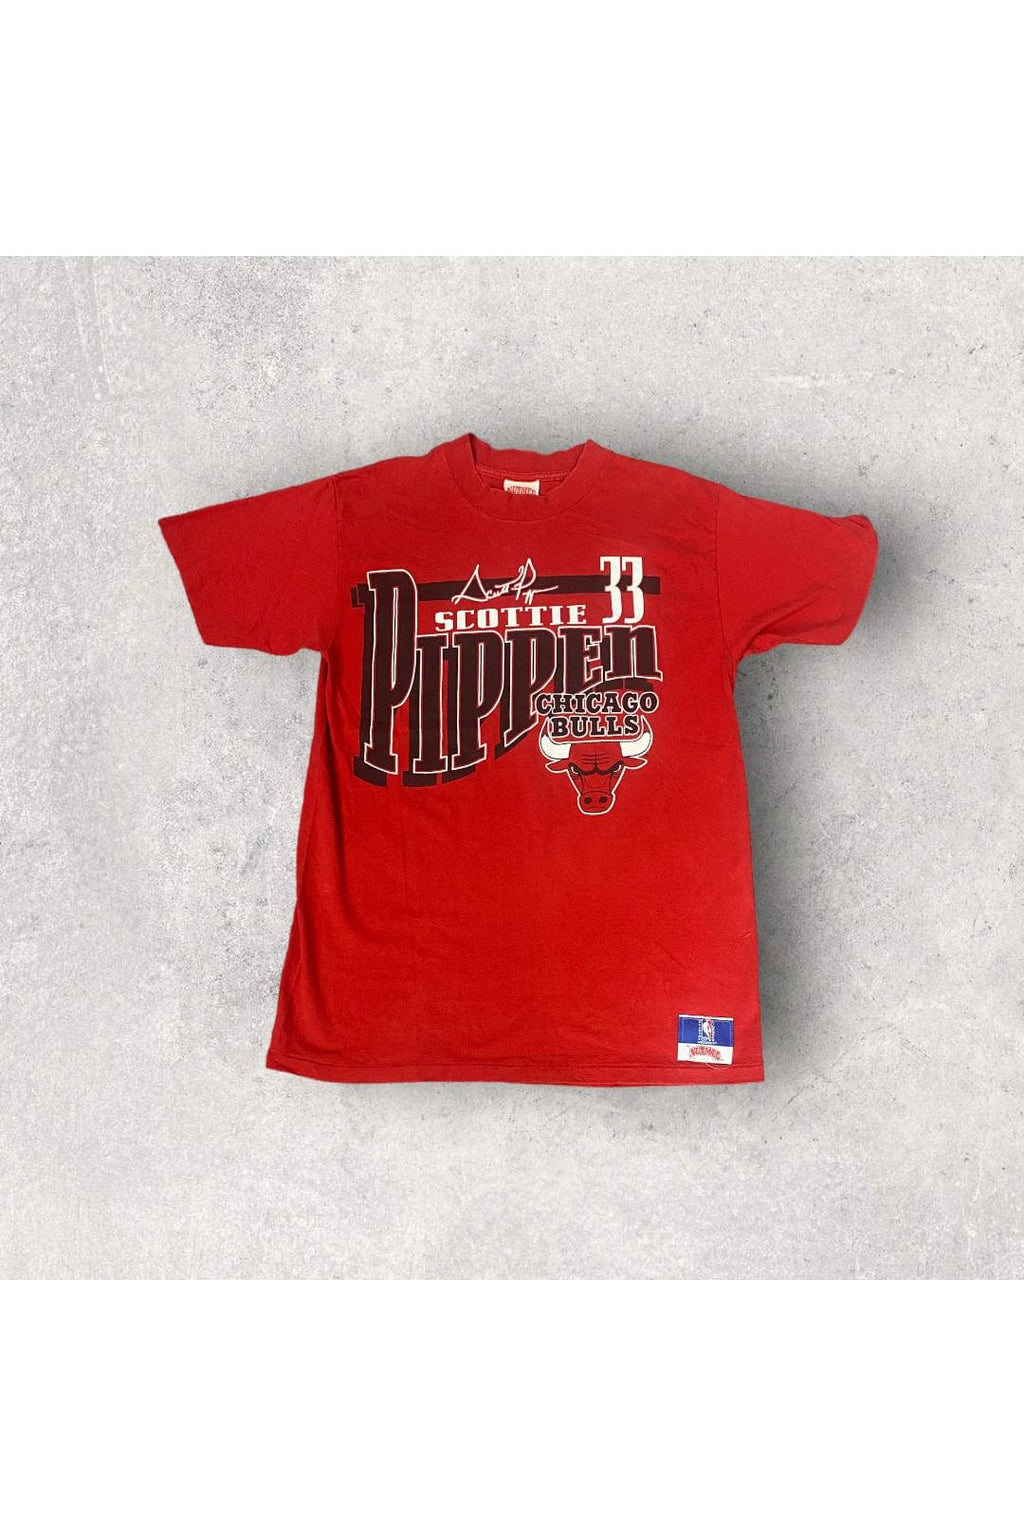 HappyGuyVintage Vintage Boston Red Sox MLB Baseball 1990s Nutmeg Mills Crewneck Sports Tee Tshirt - Vintage Red Sox Sports Tshirt (Large)